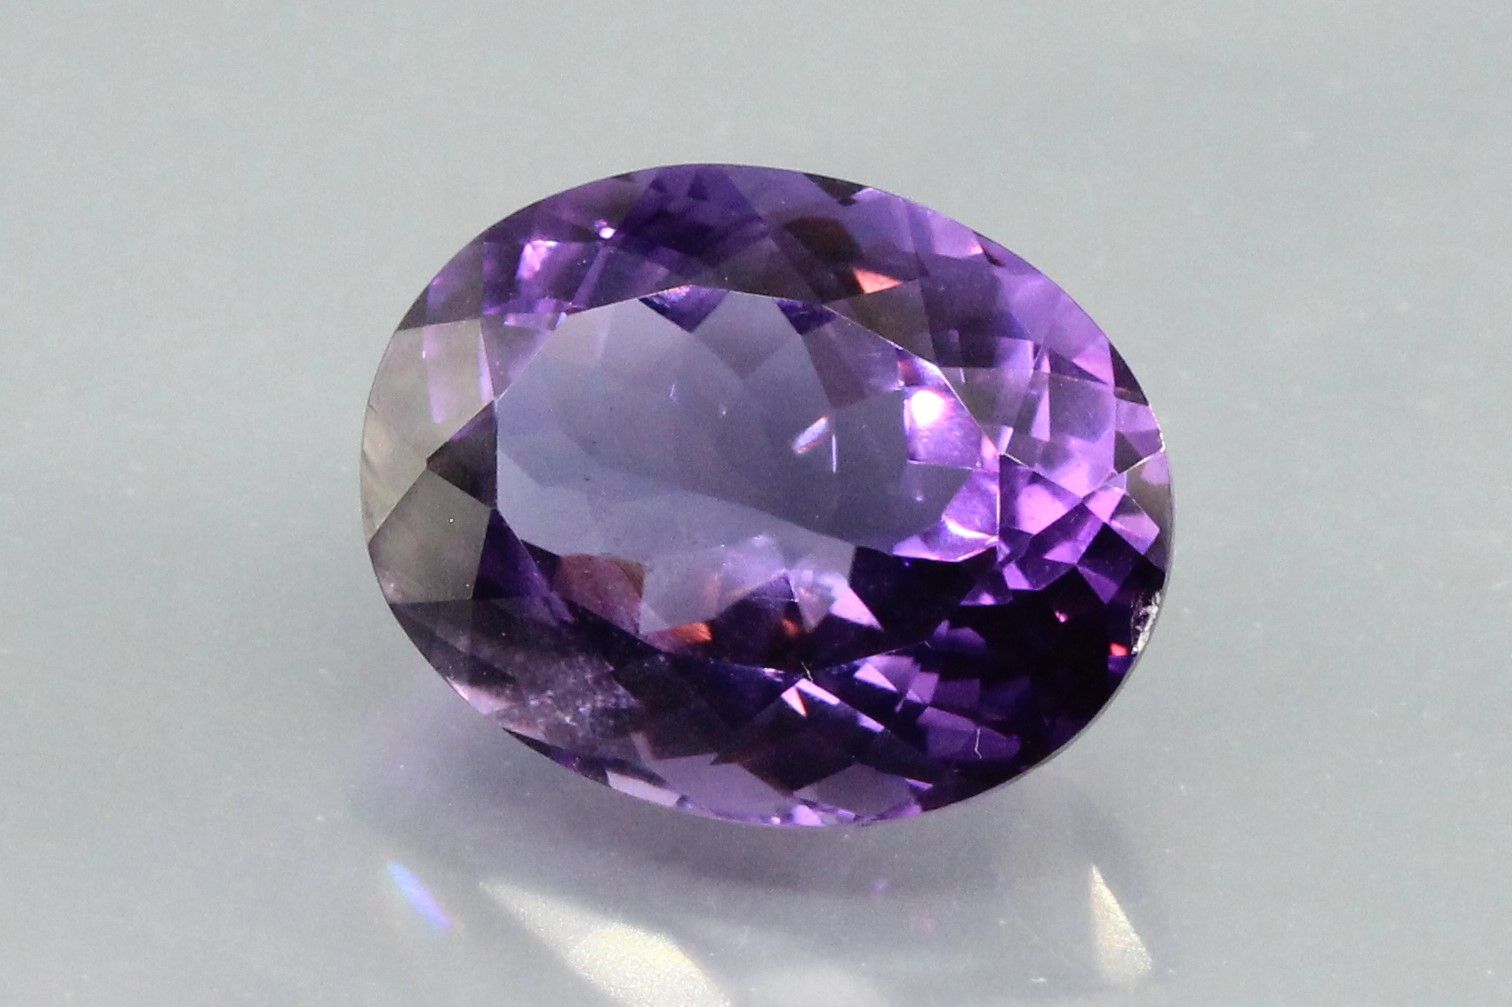 Null 椭圆形紫水晶在纸上。

重量：11.41克拉。